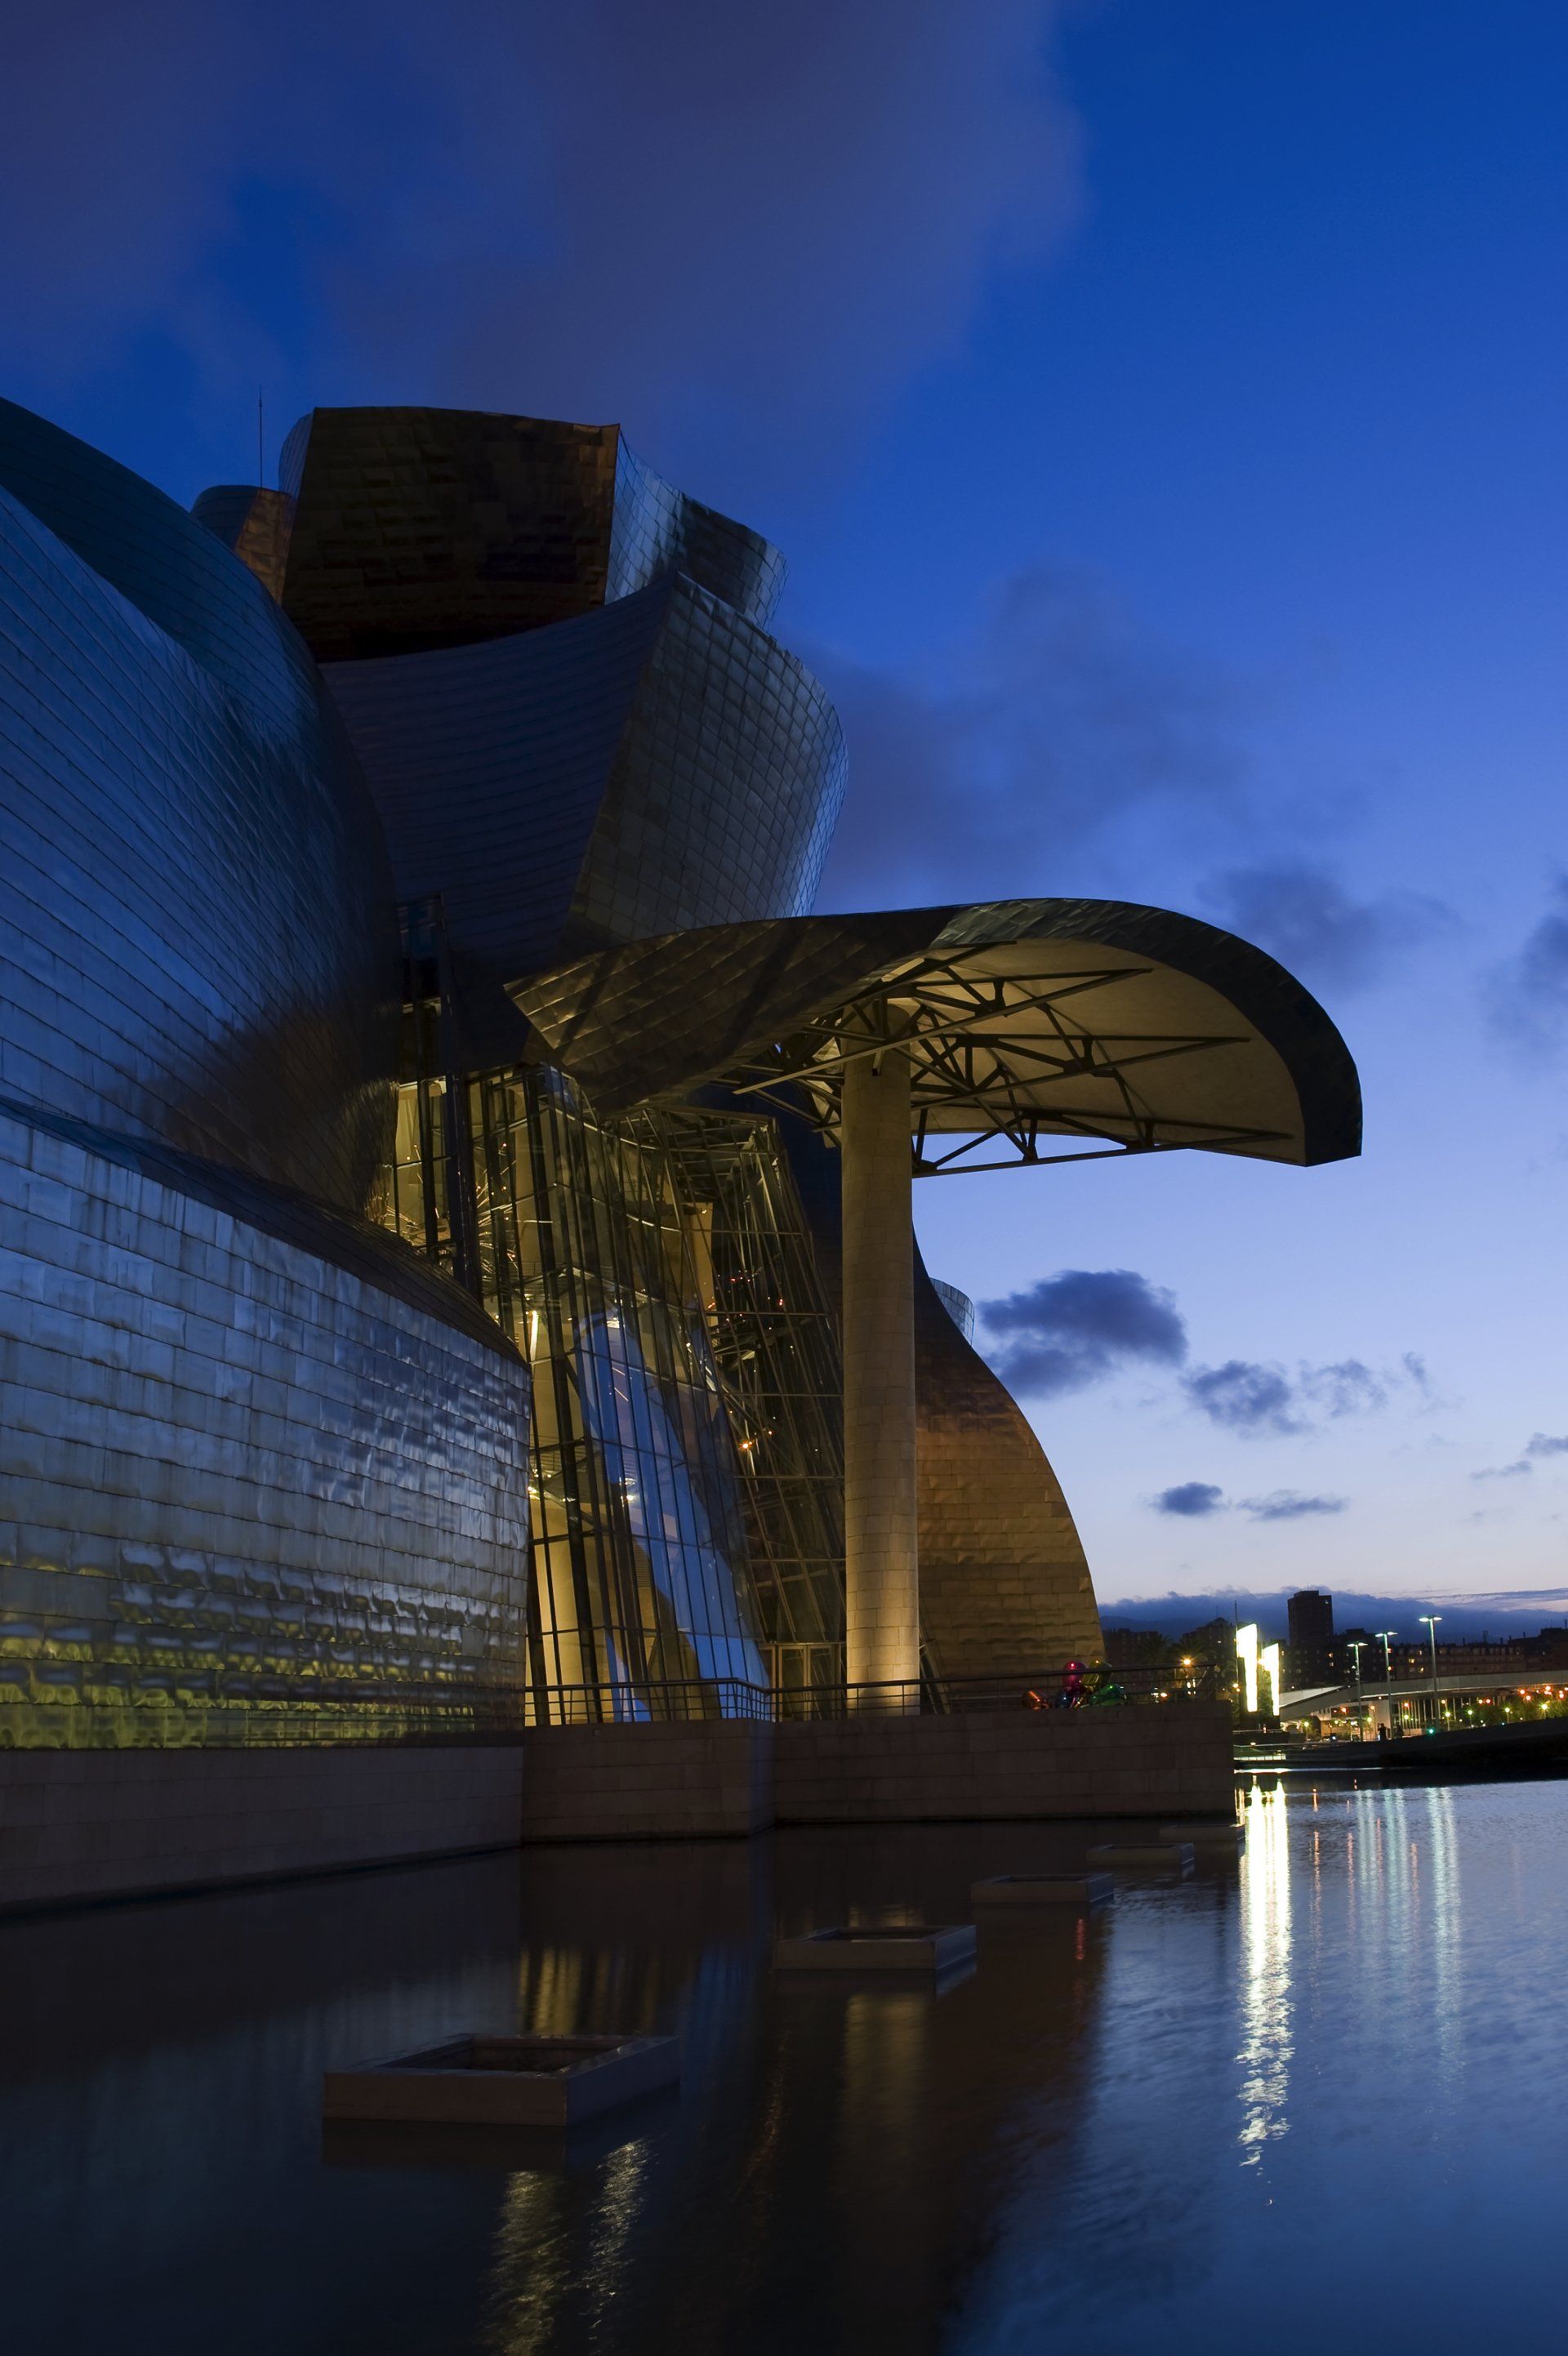 © FMGB Guggenheim Bilbao Museoa, Bilbao 2020